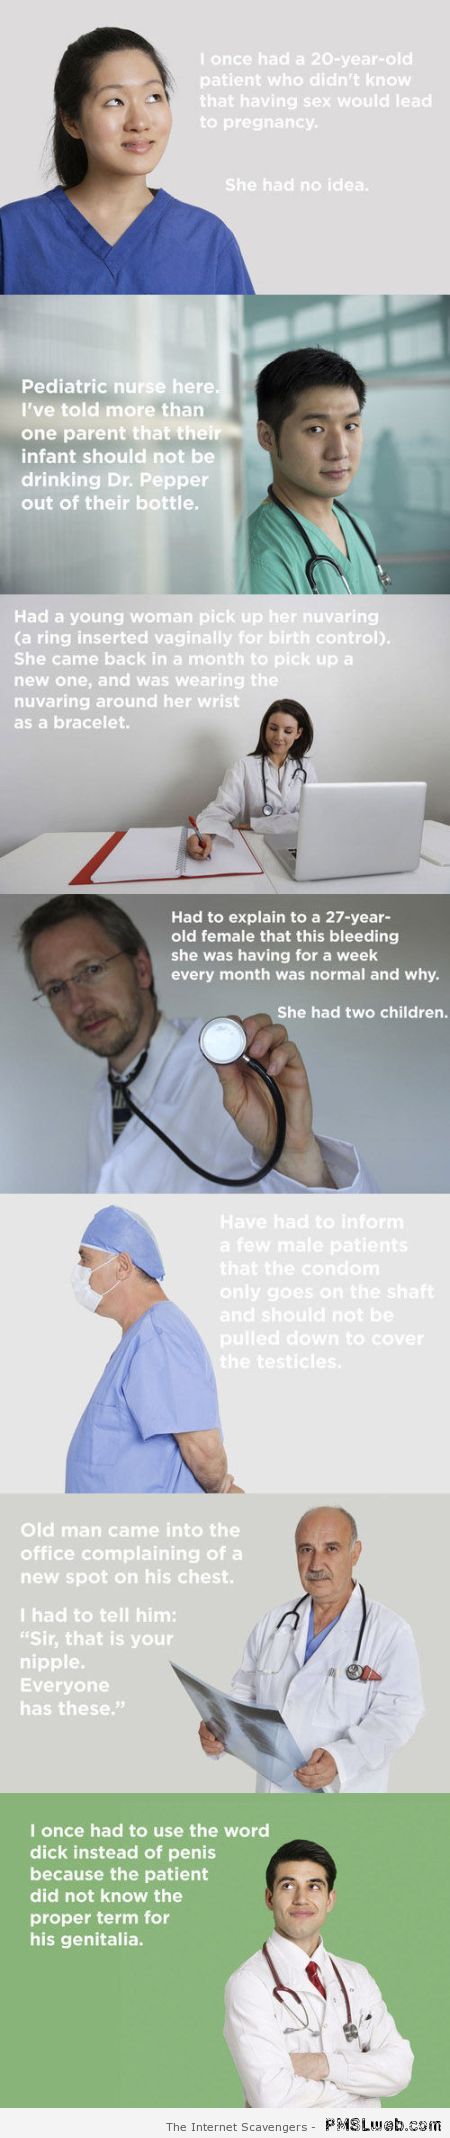 Funny medical stories at PMSLweb.com